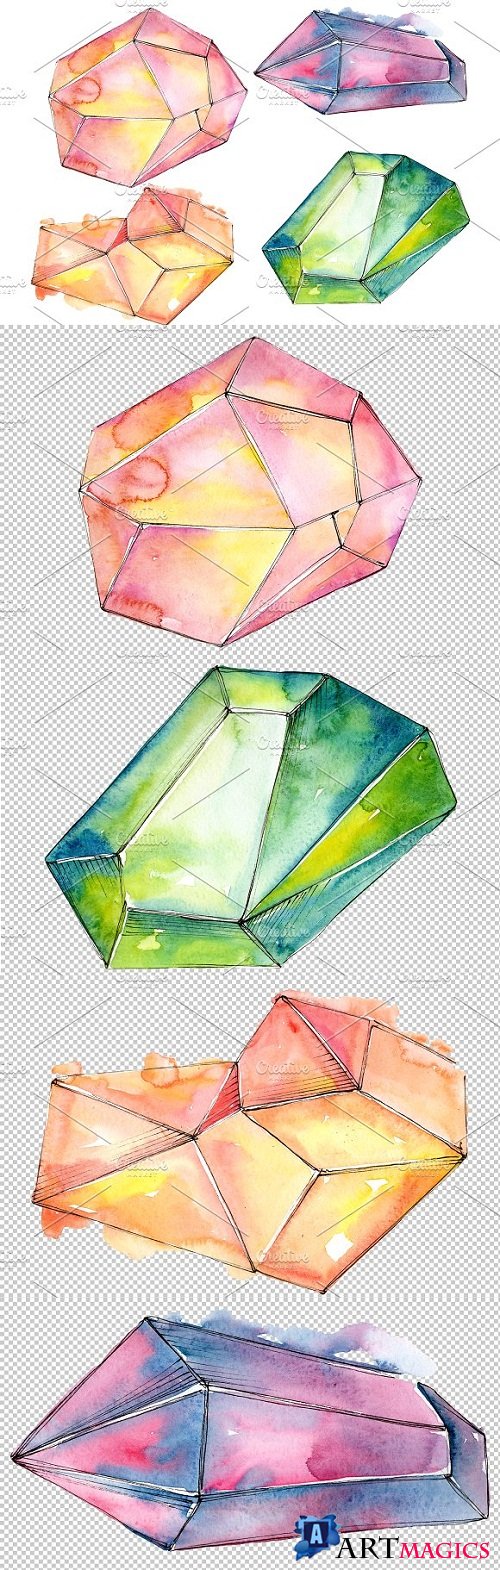 Crystals orange and green Watercolor - 3537998